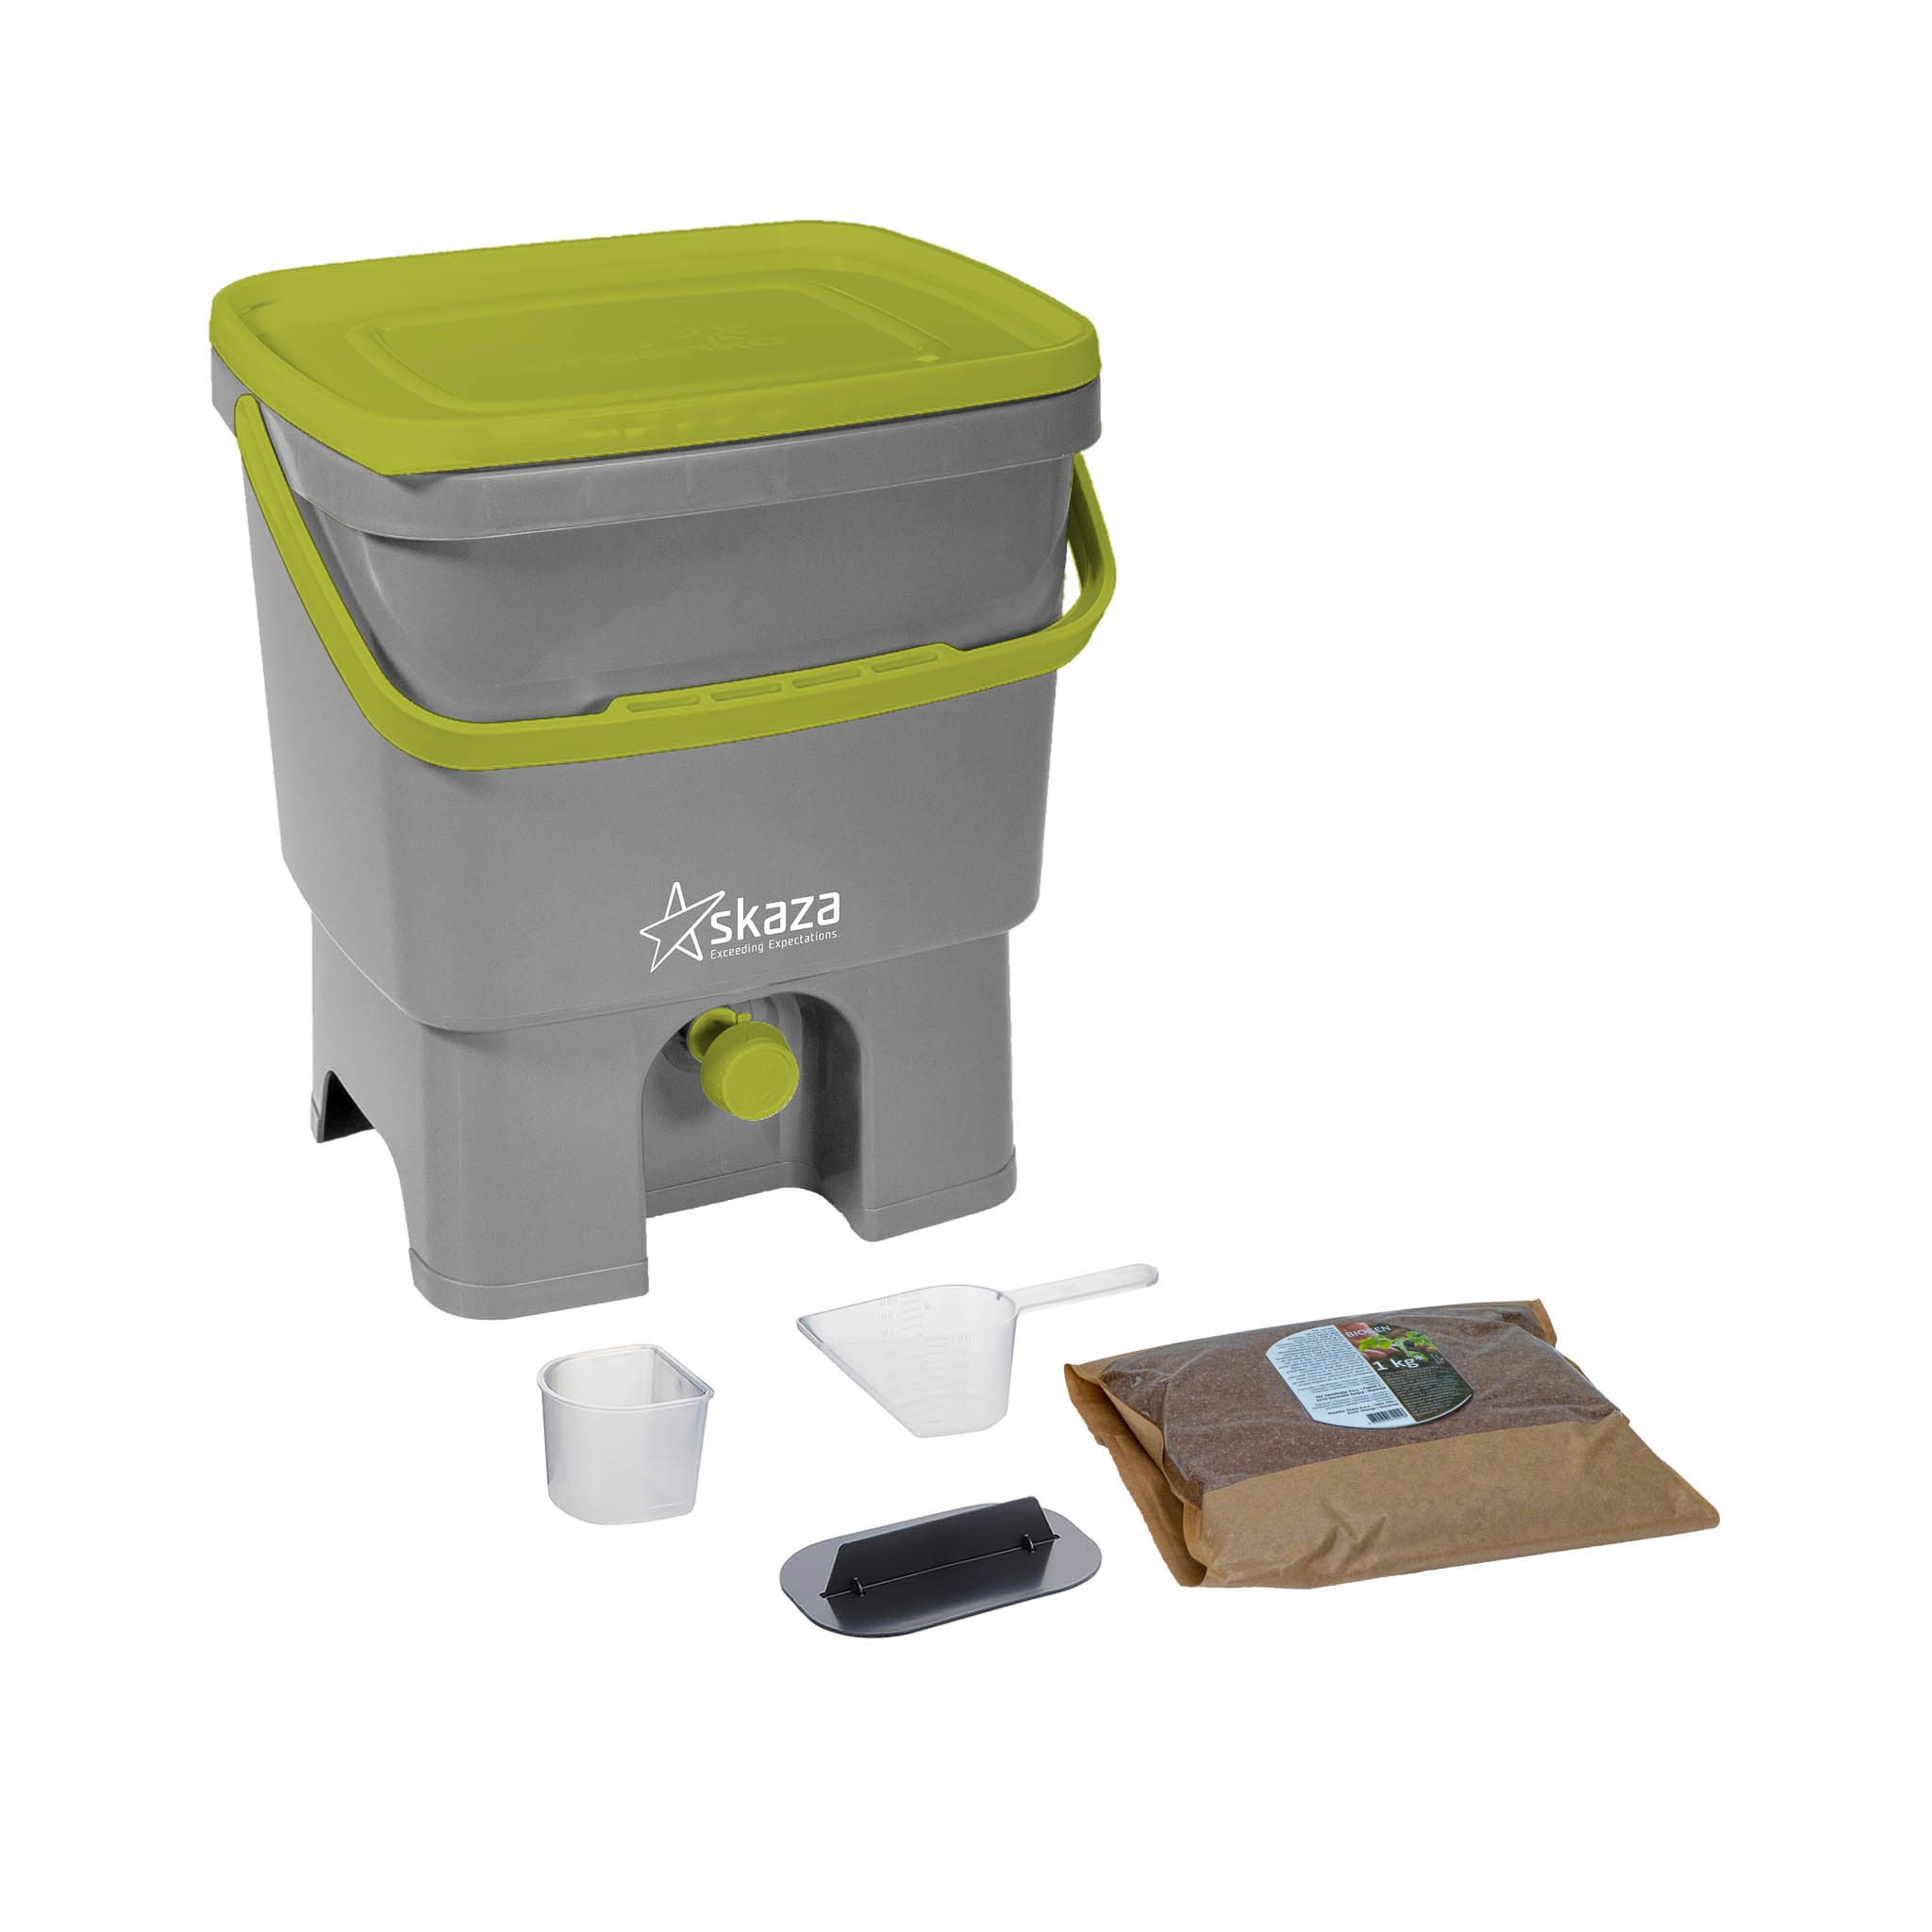 Skaza Organko Grey and Light Green Composter Starter Kit